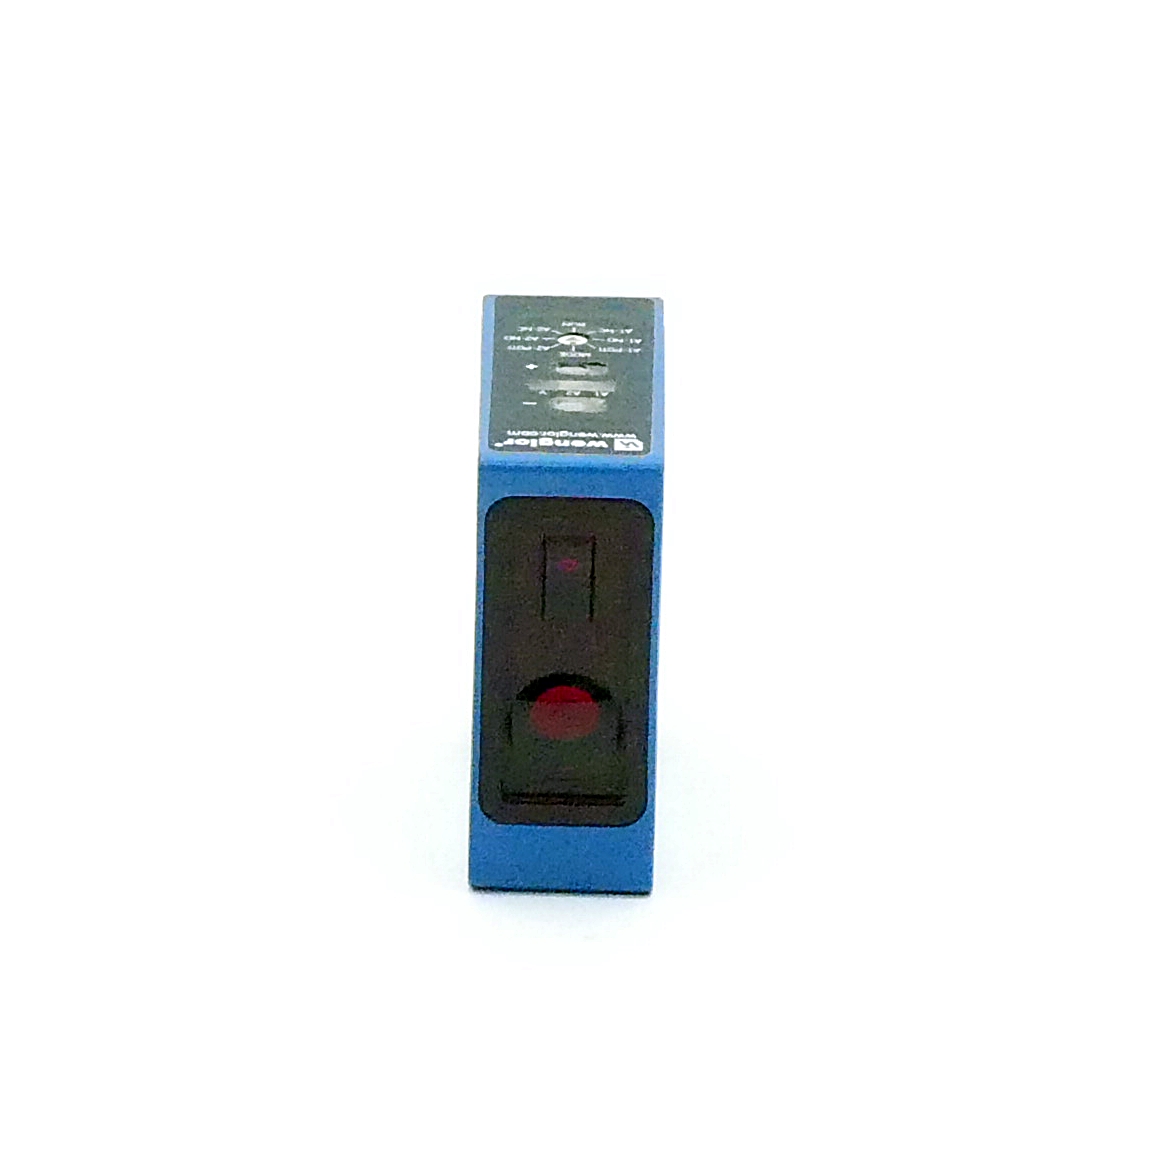 Laserdistanzsensor OCP662X0135 